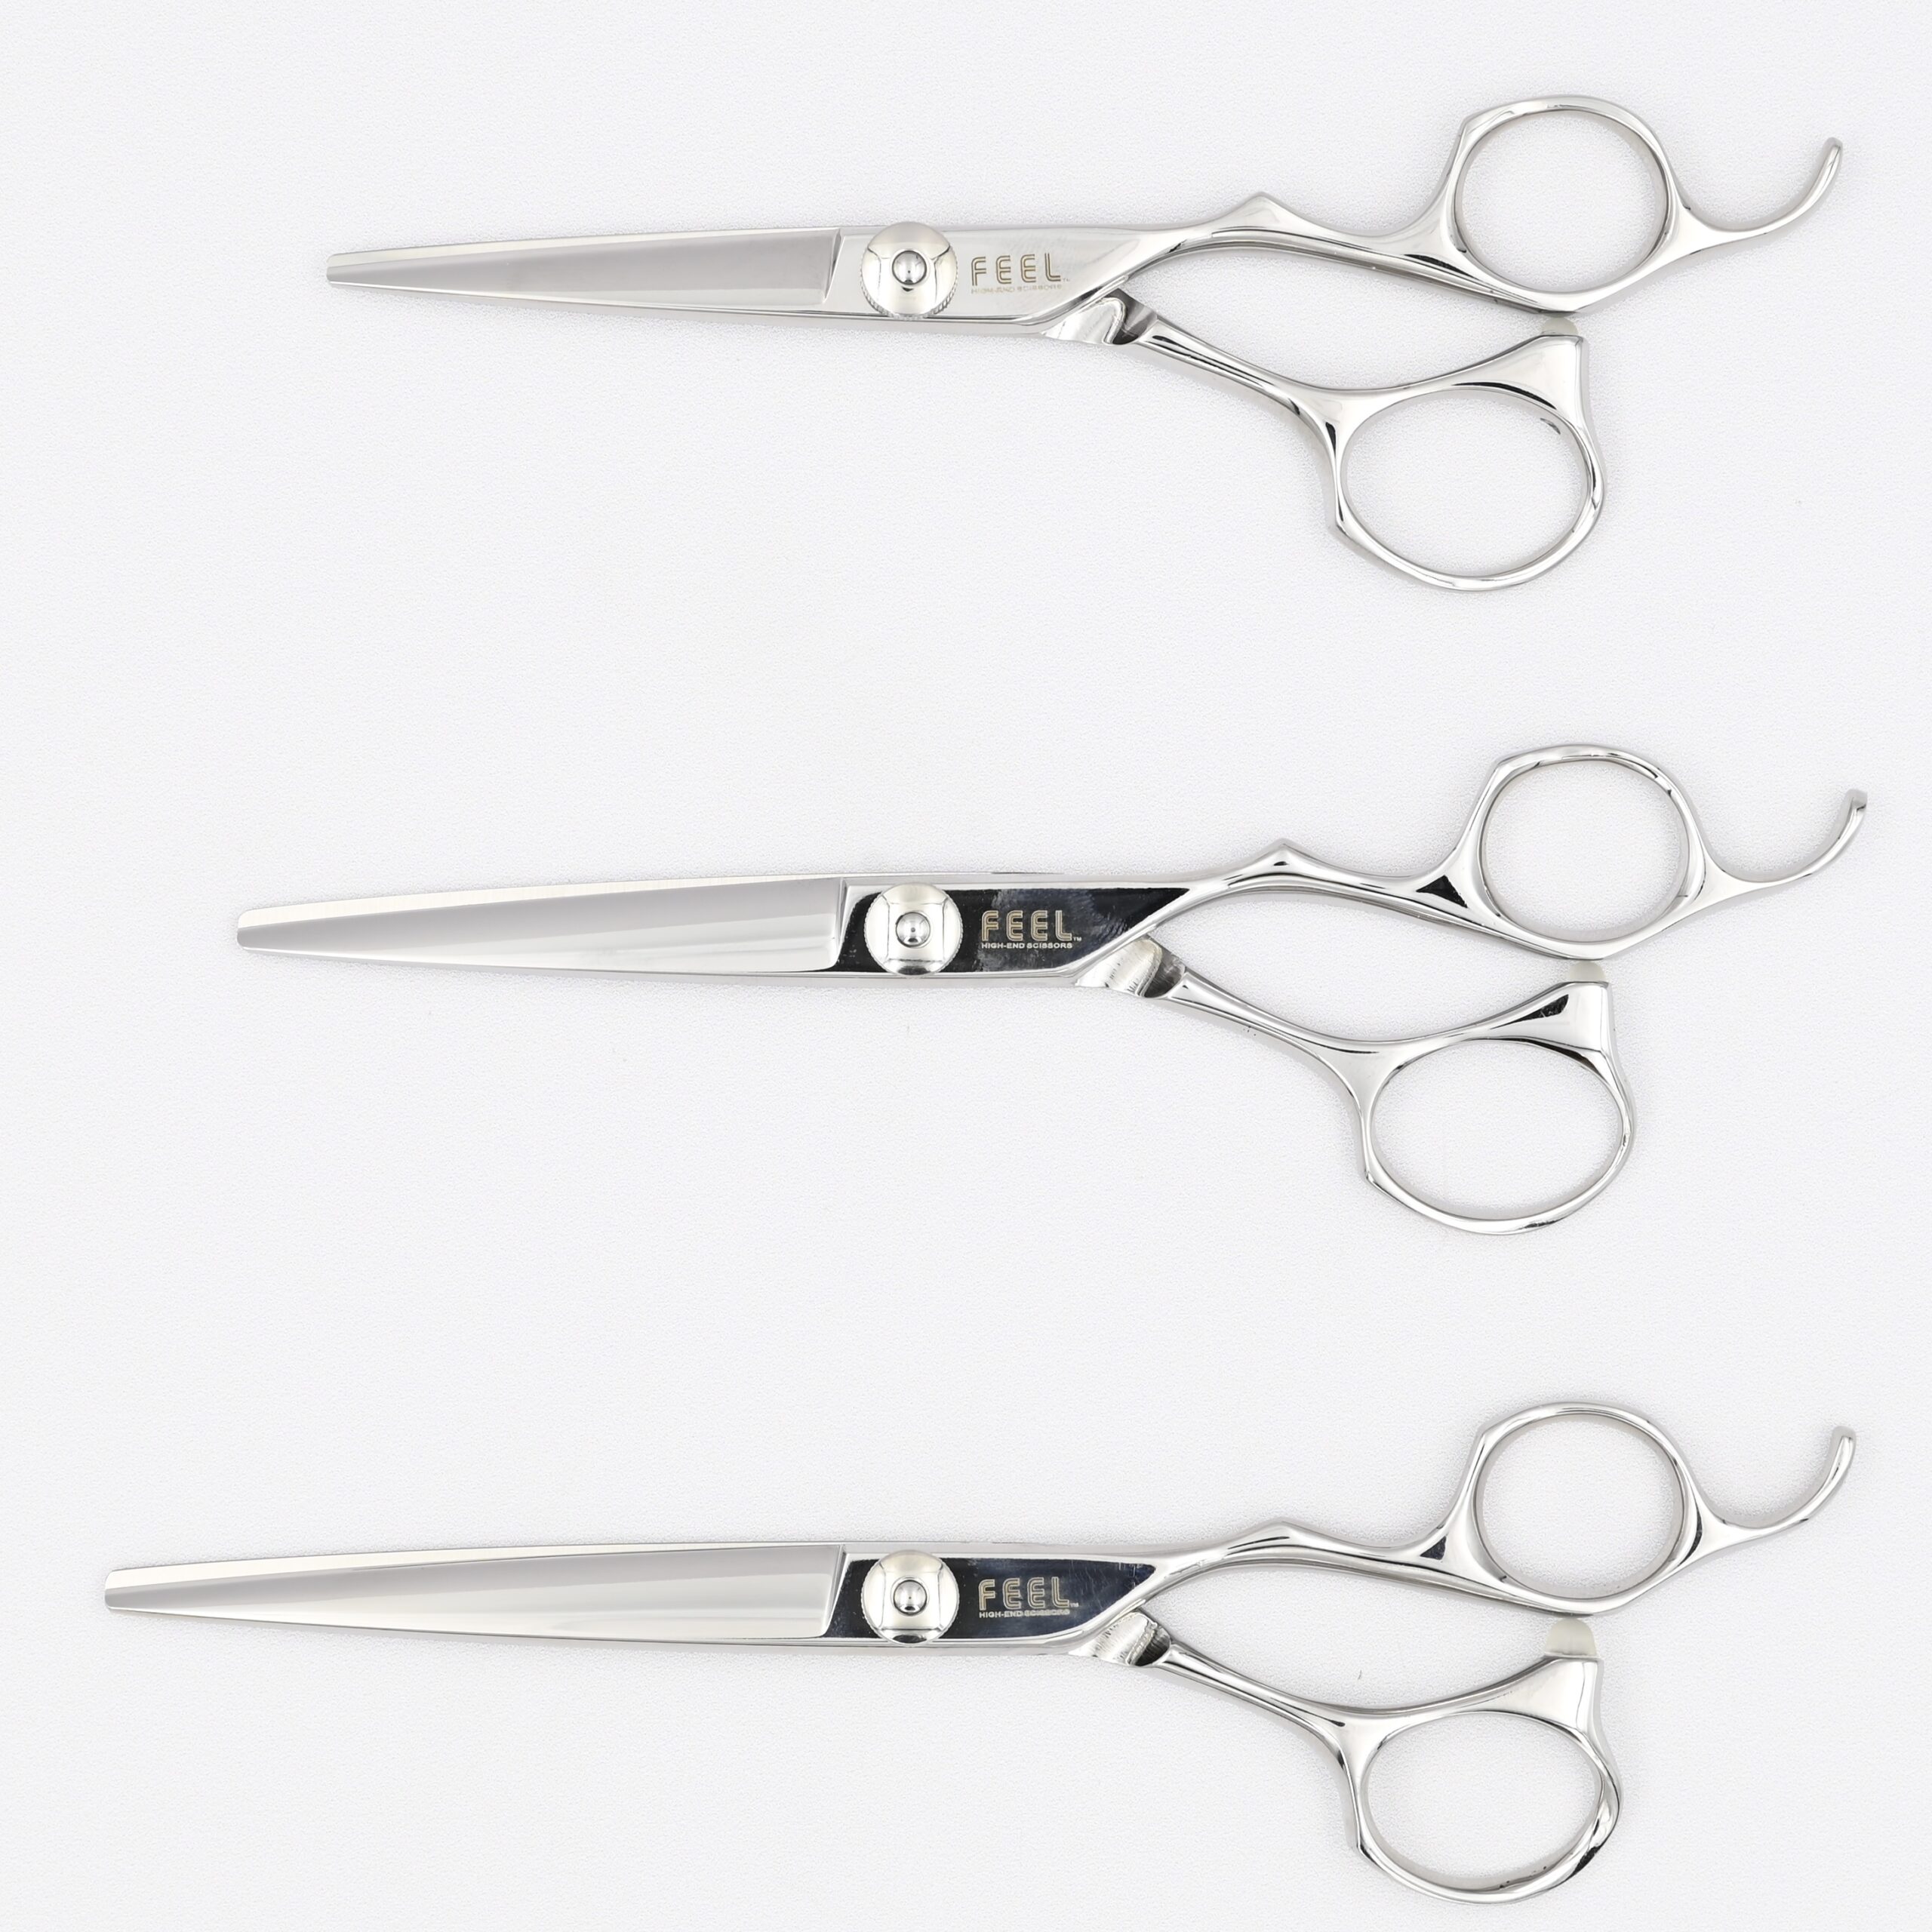 FEEL Basic PRO Texture 10302 Shear - Japan Pro Tools